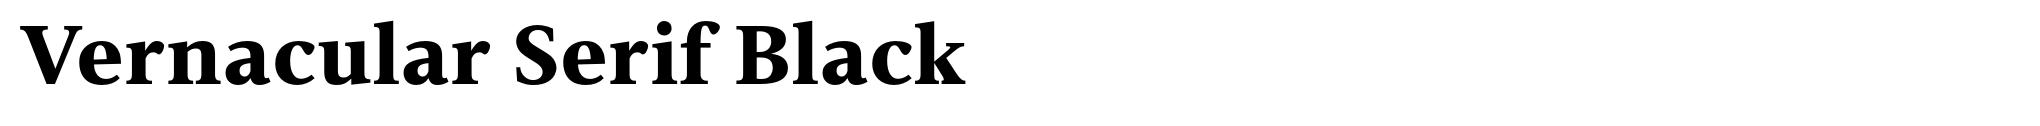 Vernacular Serif Black image